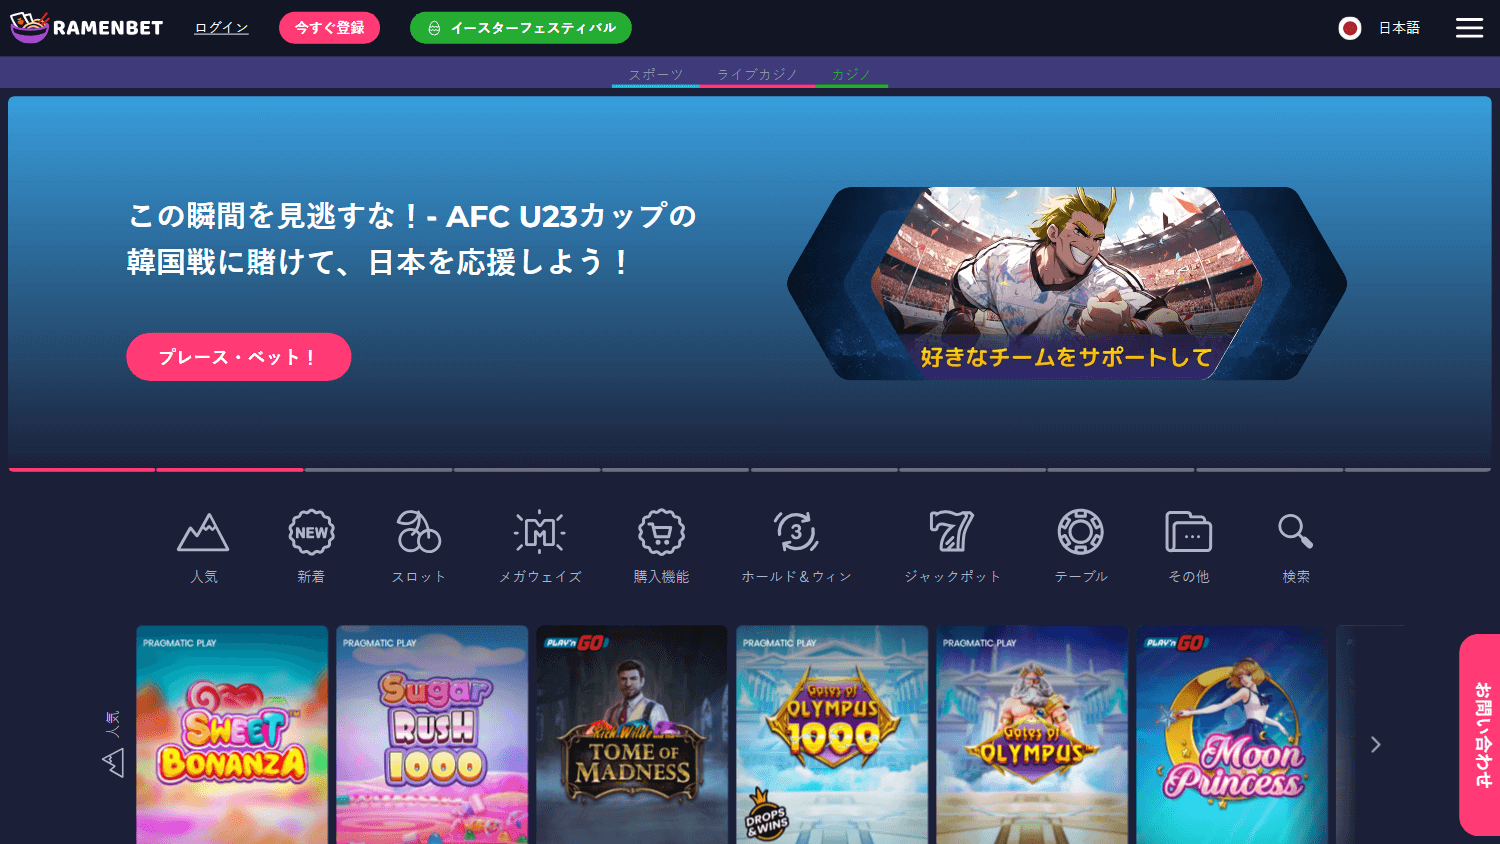 ramenbet_casino_homepage_desktop